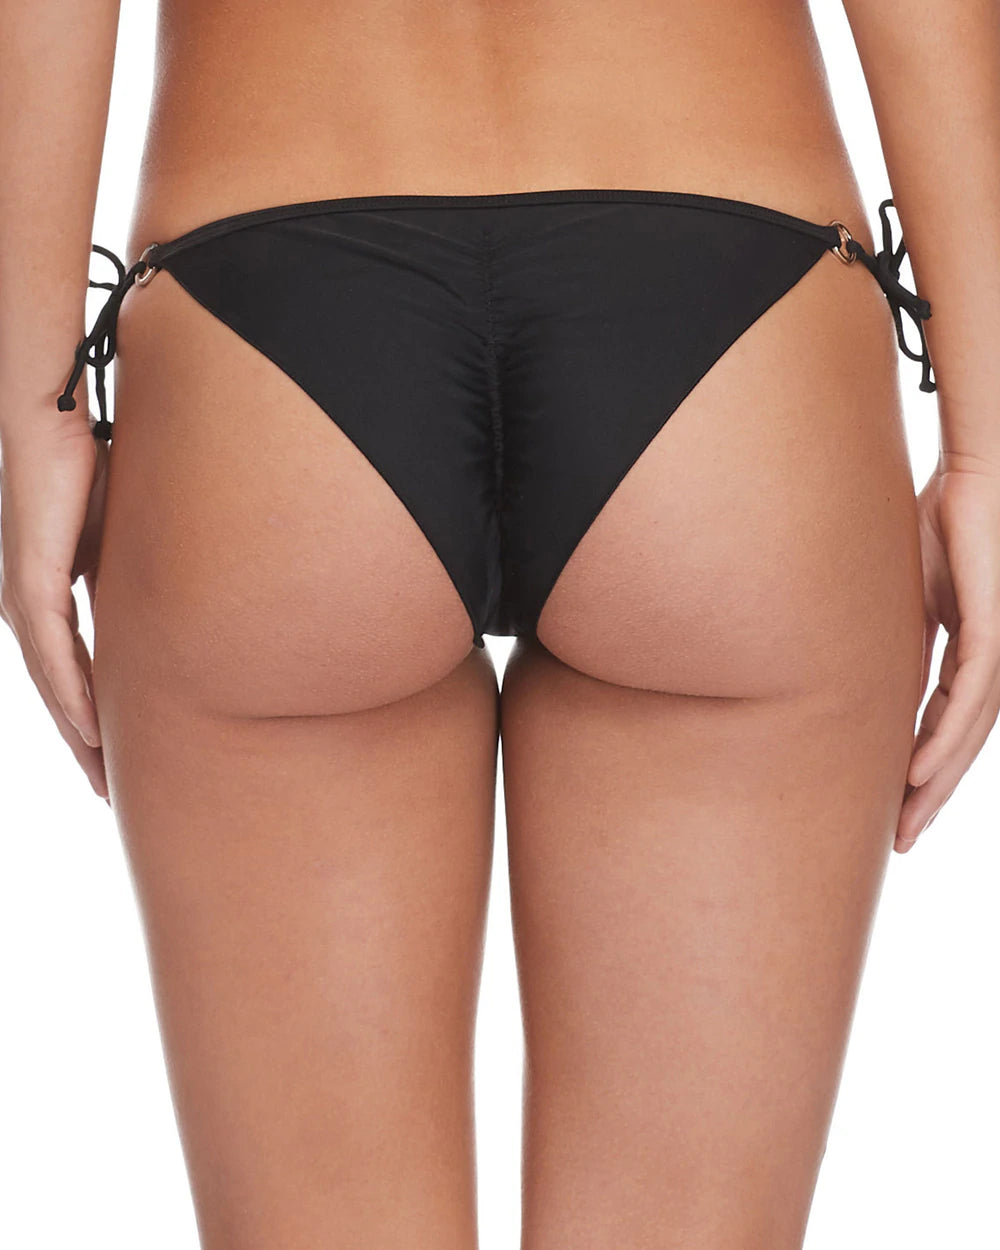 Body Glove Smoothies Brasilia Side-Tie Bikini Bottom - Black